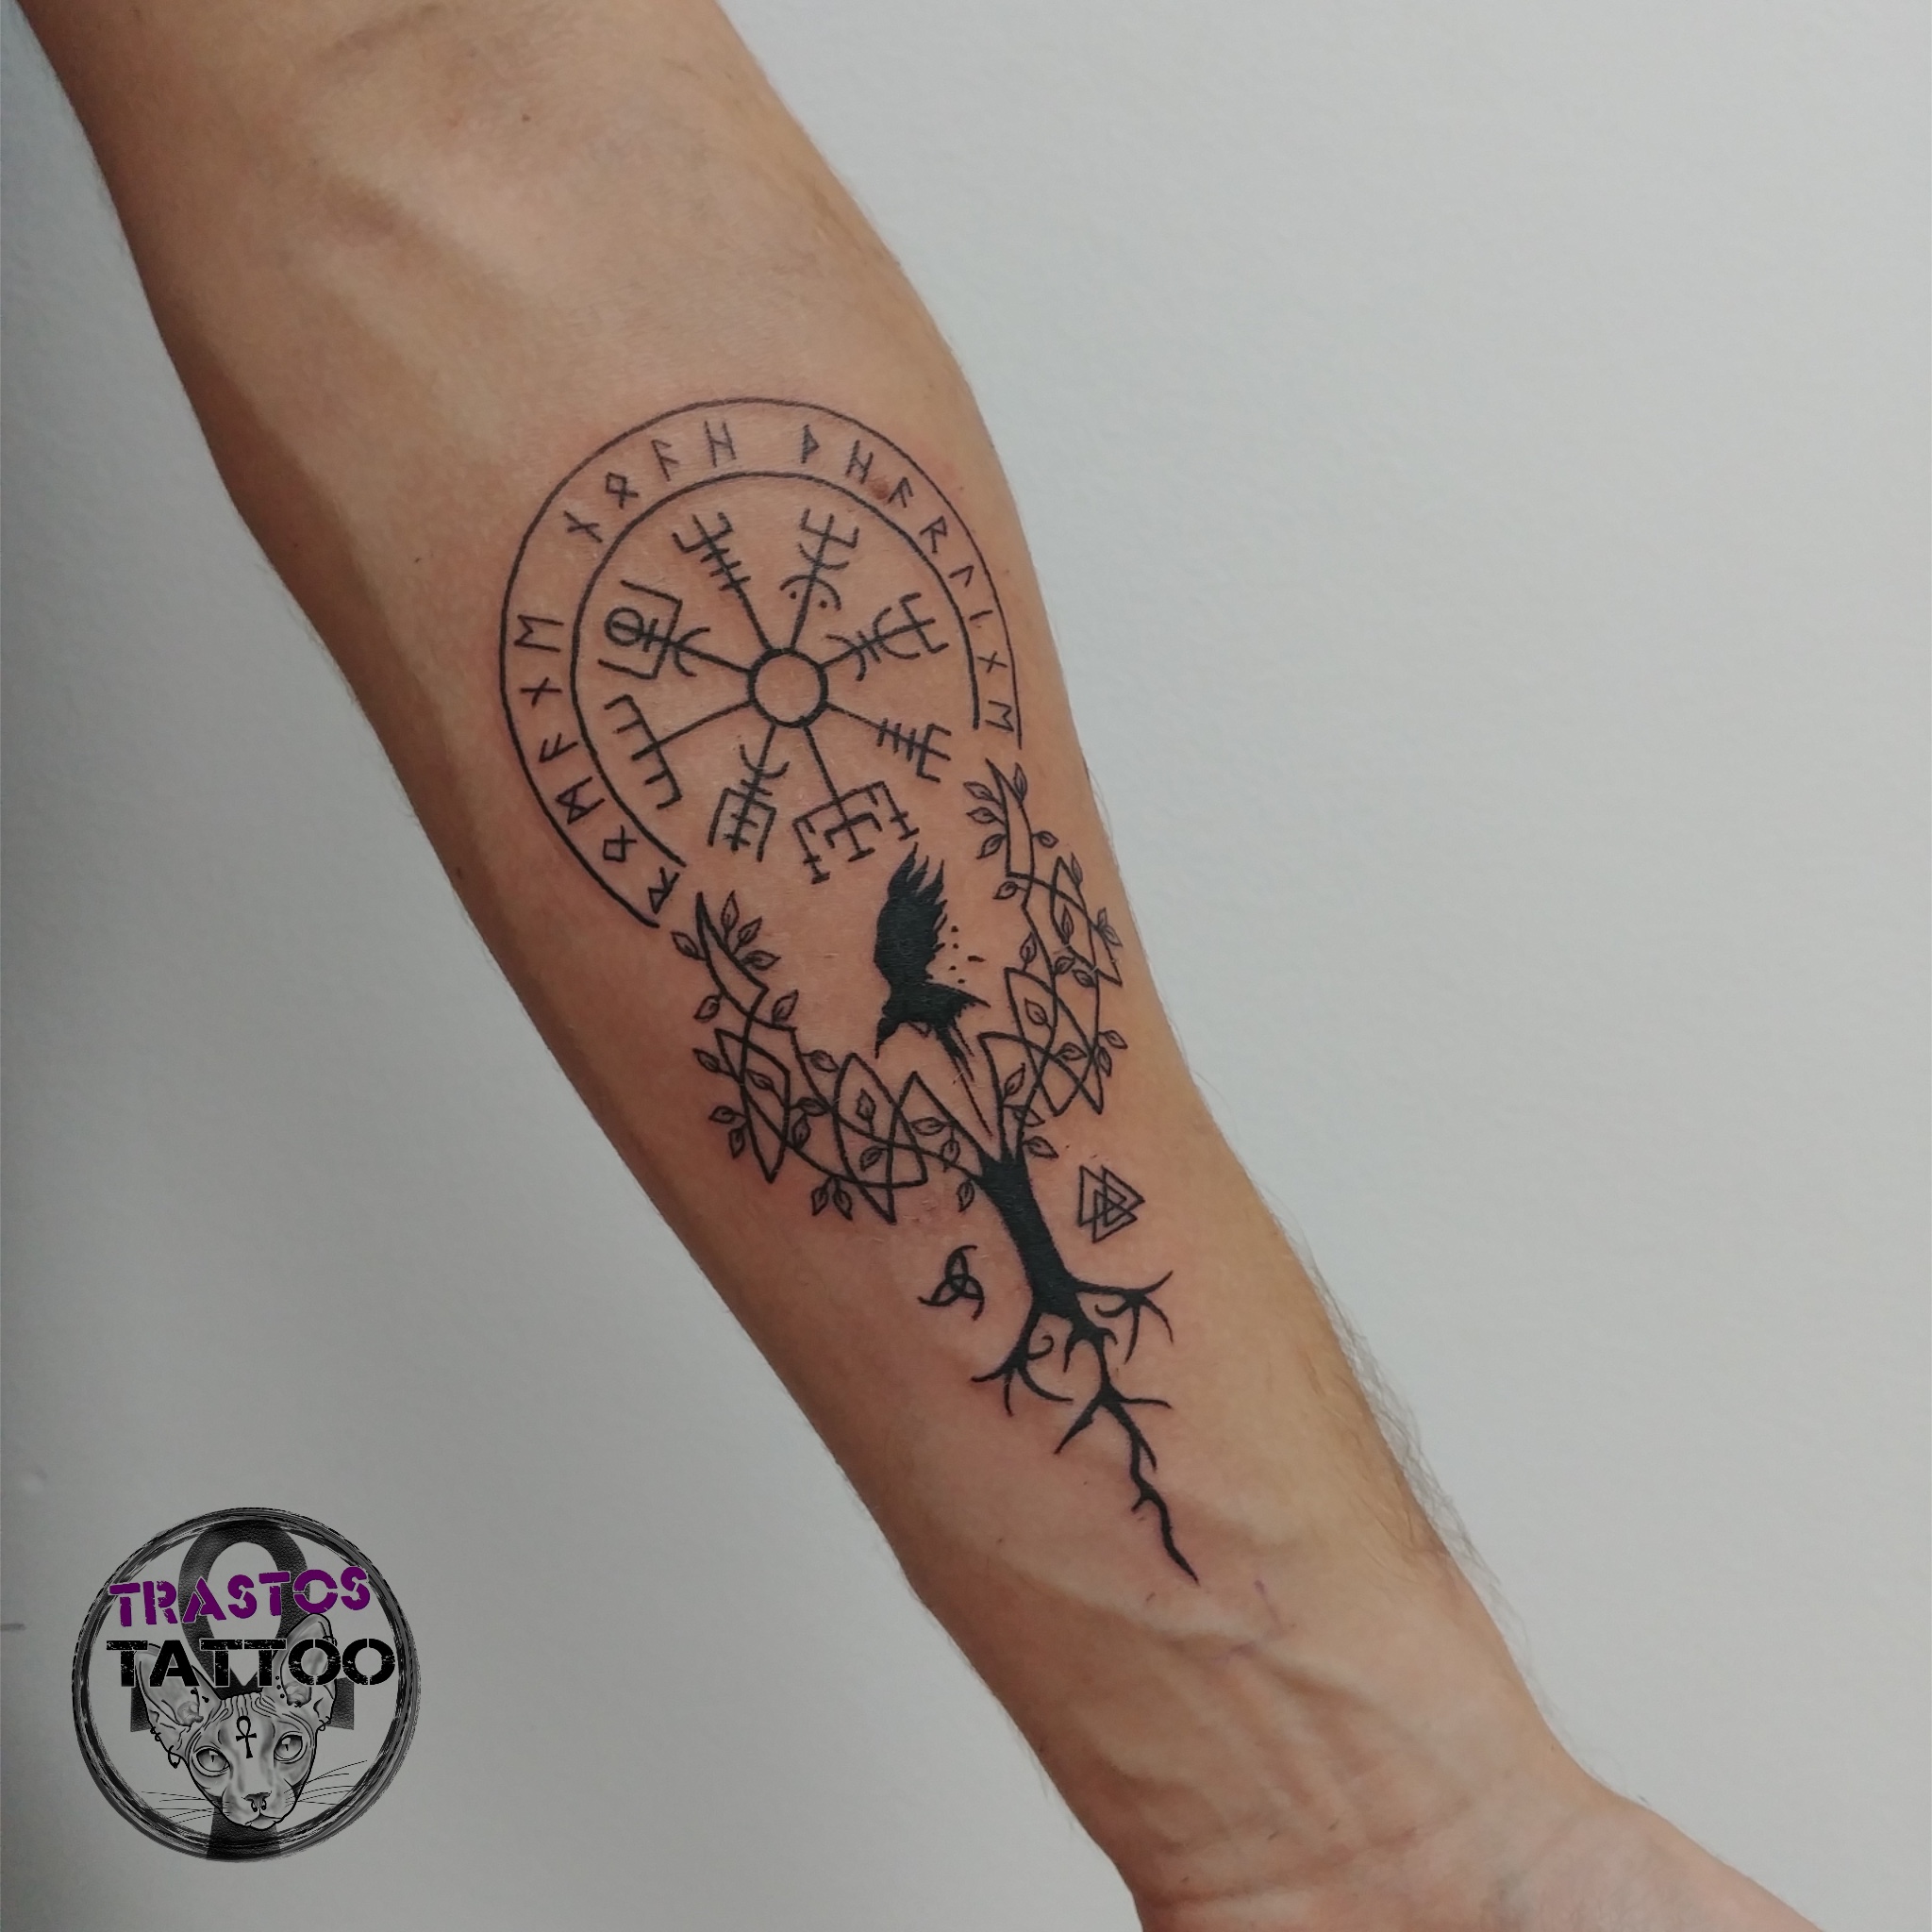 Tatuaje Vikingo - Trastos Tattoo